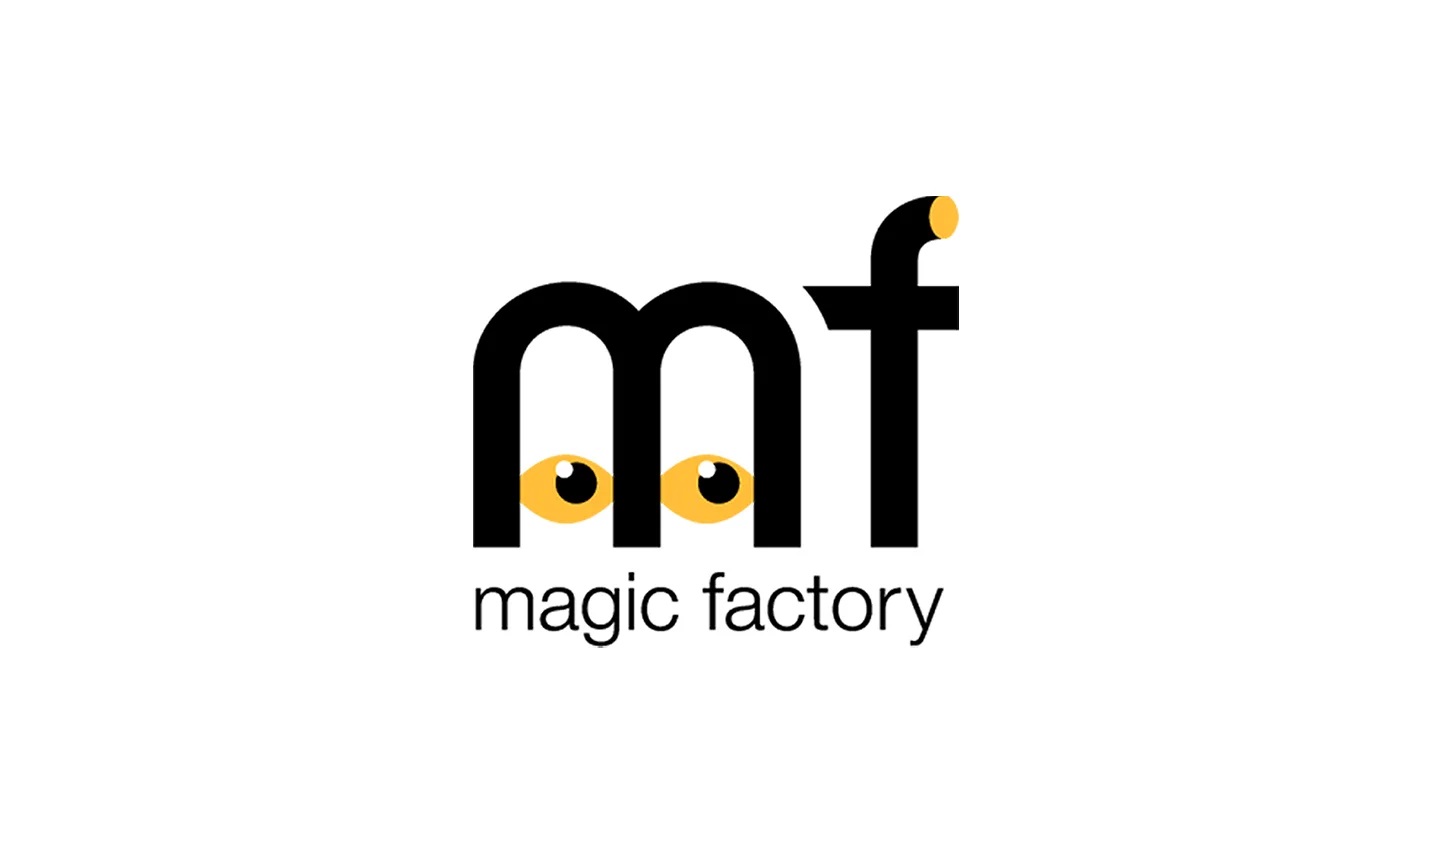 Magic factory. Студия Magic Factory. Magic Factory animation. Magic Factory logo.